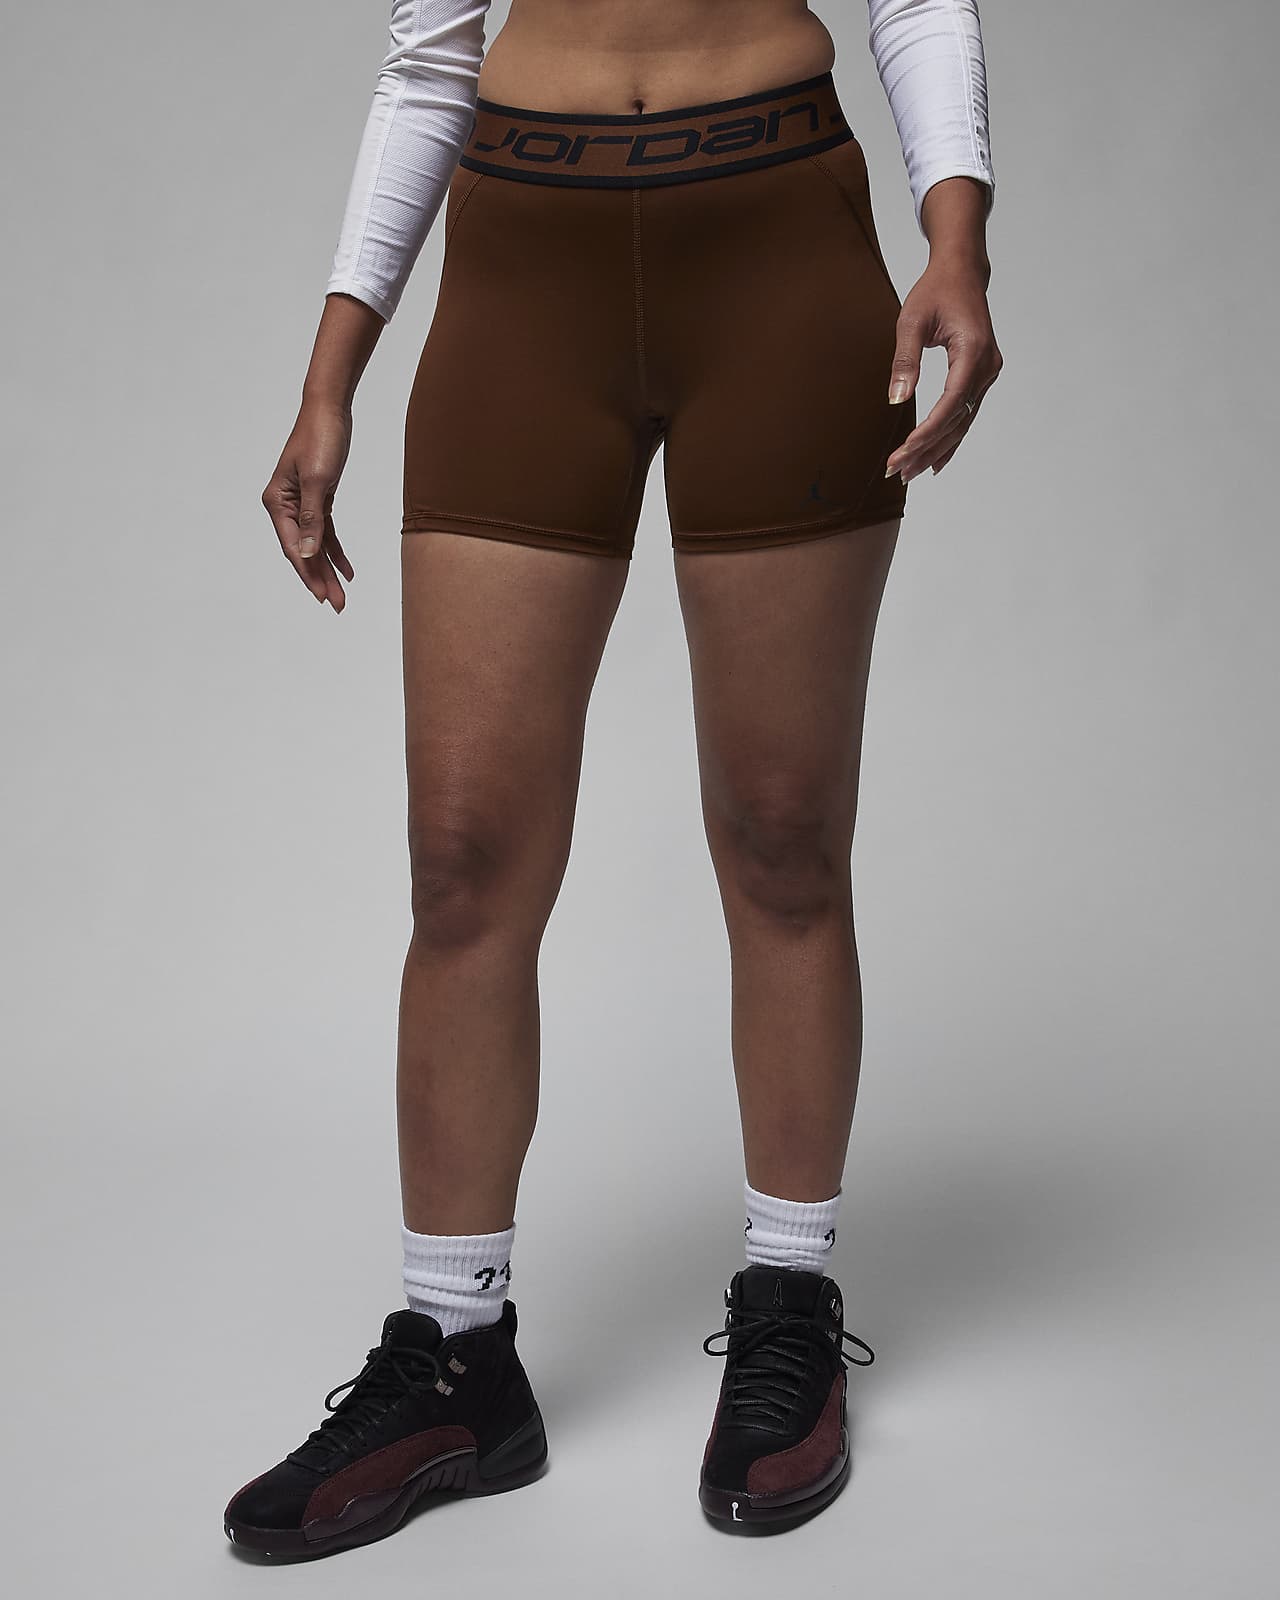 Jordan Sport Women's 13cm (approx.) Shorts